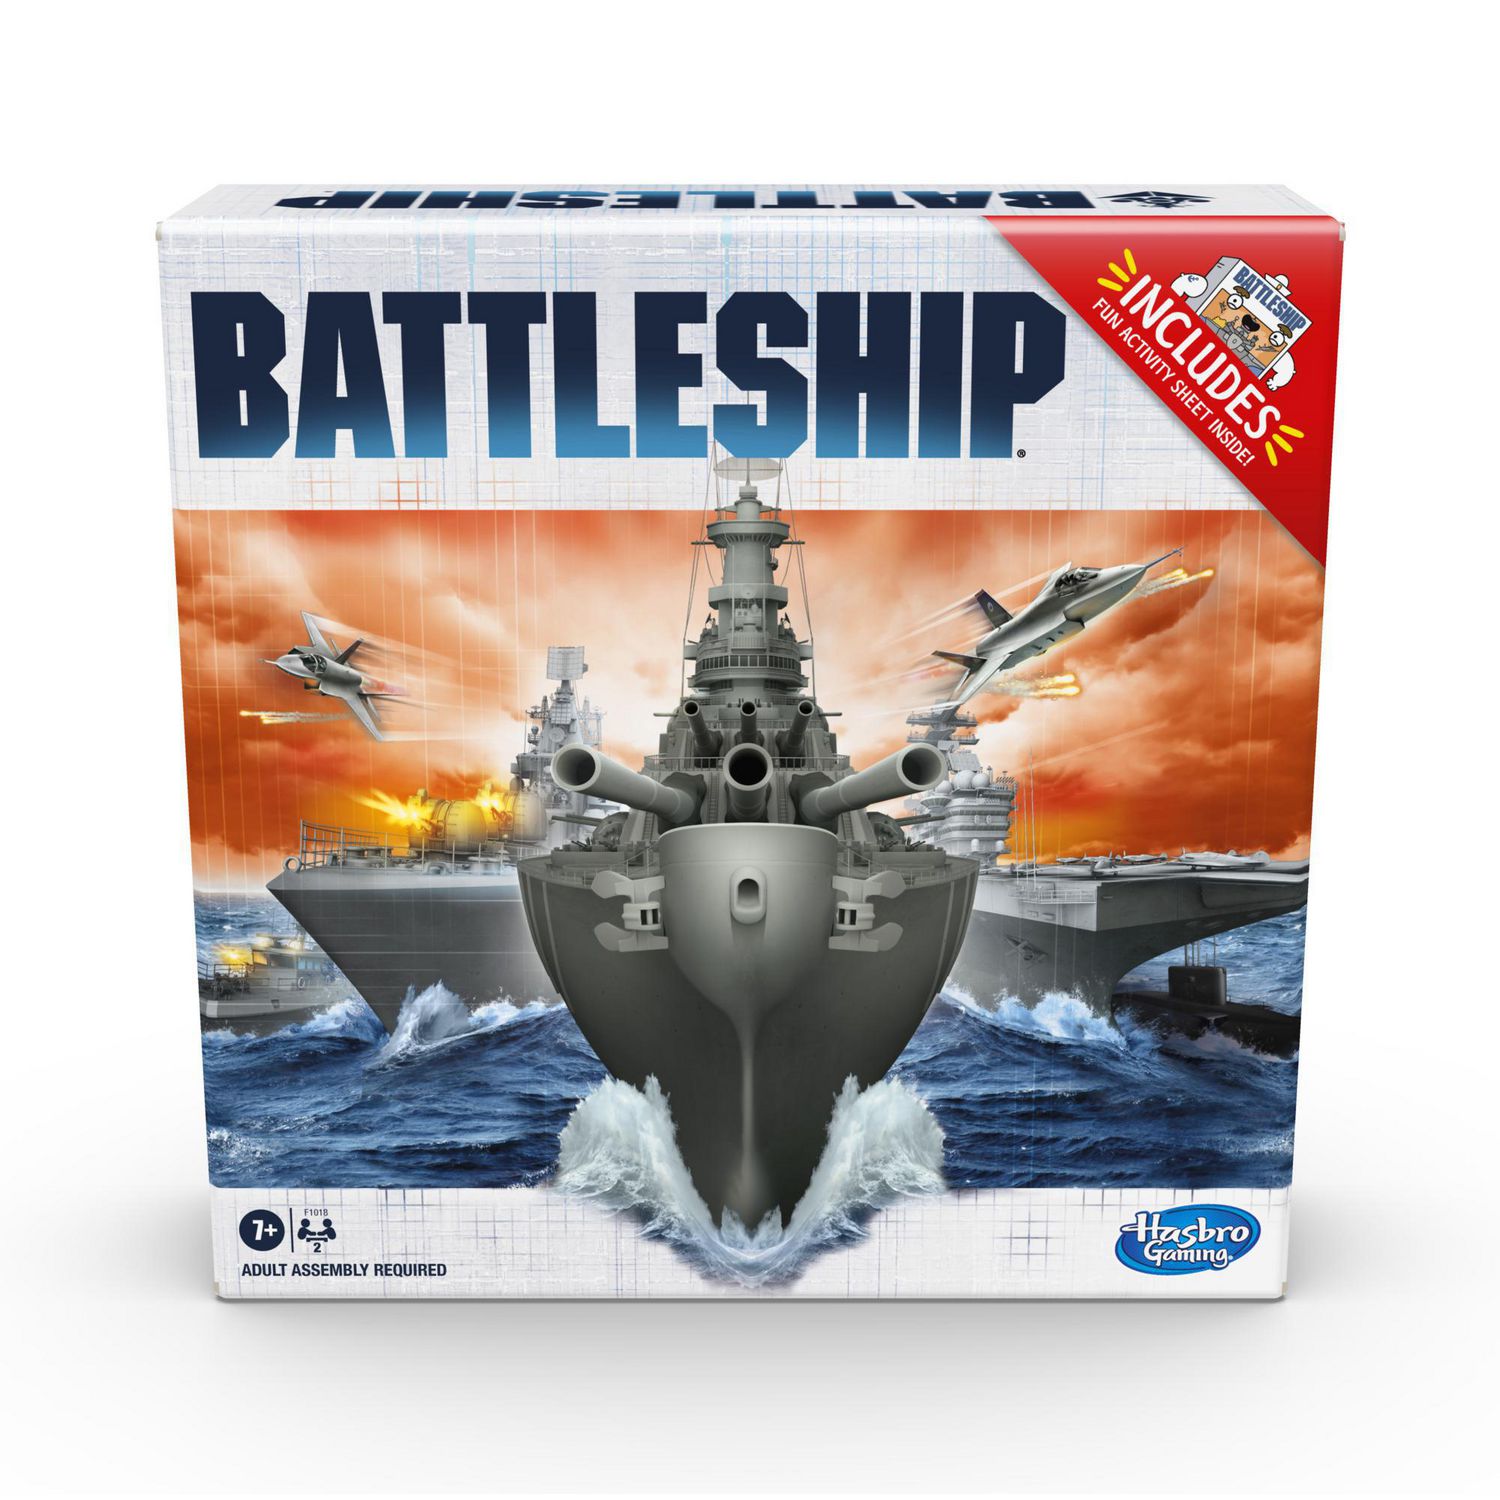 battleship games free online